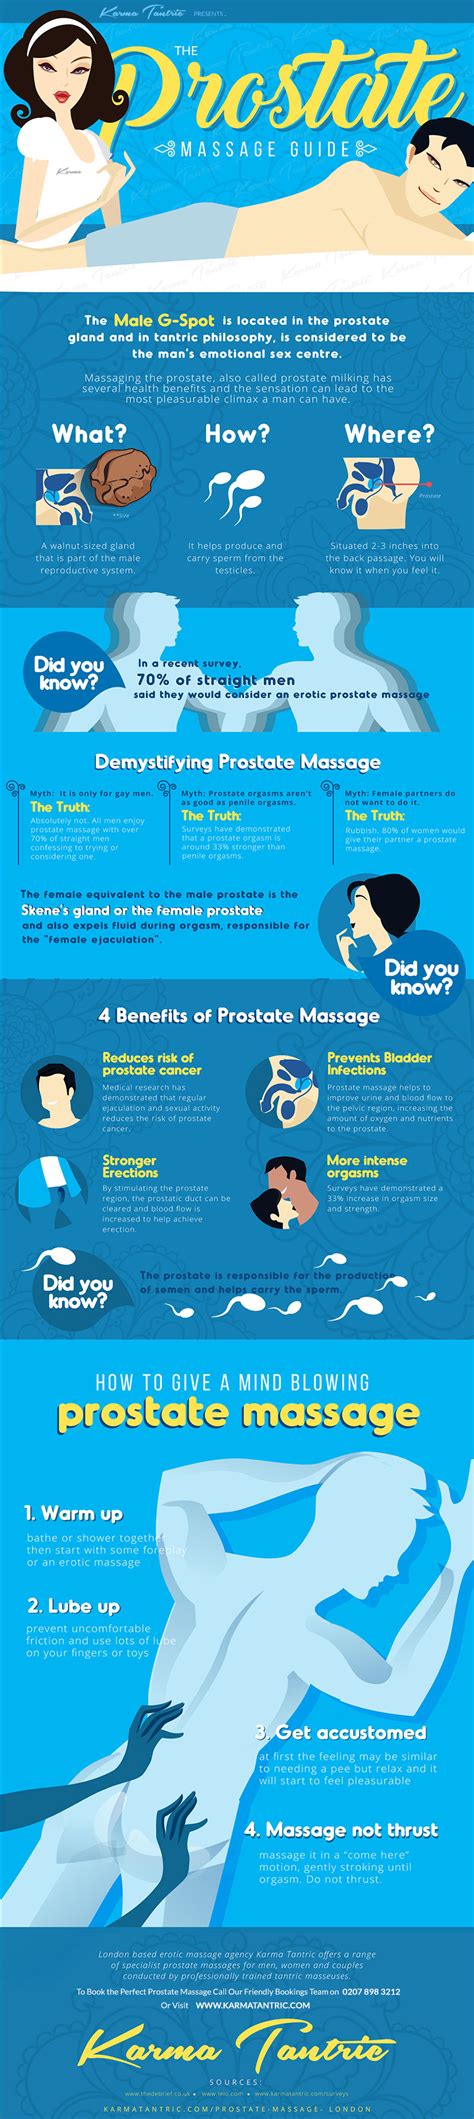 Massage Prostate Man – Telegraph